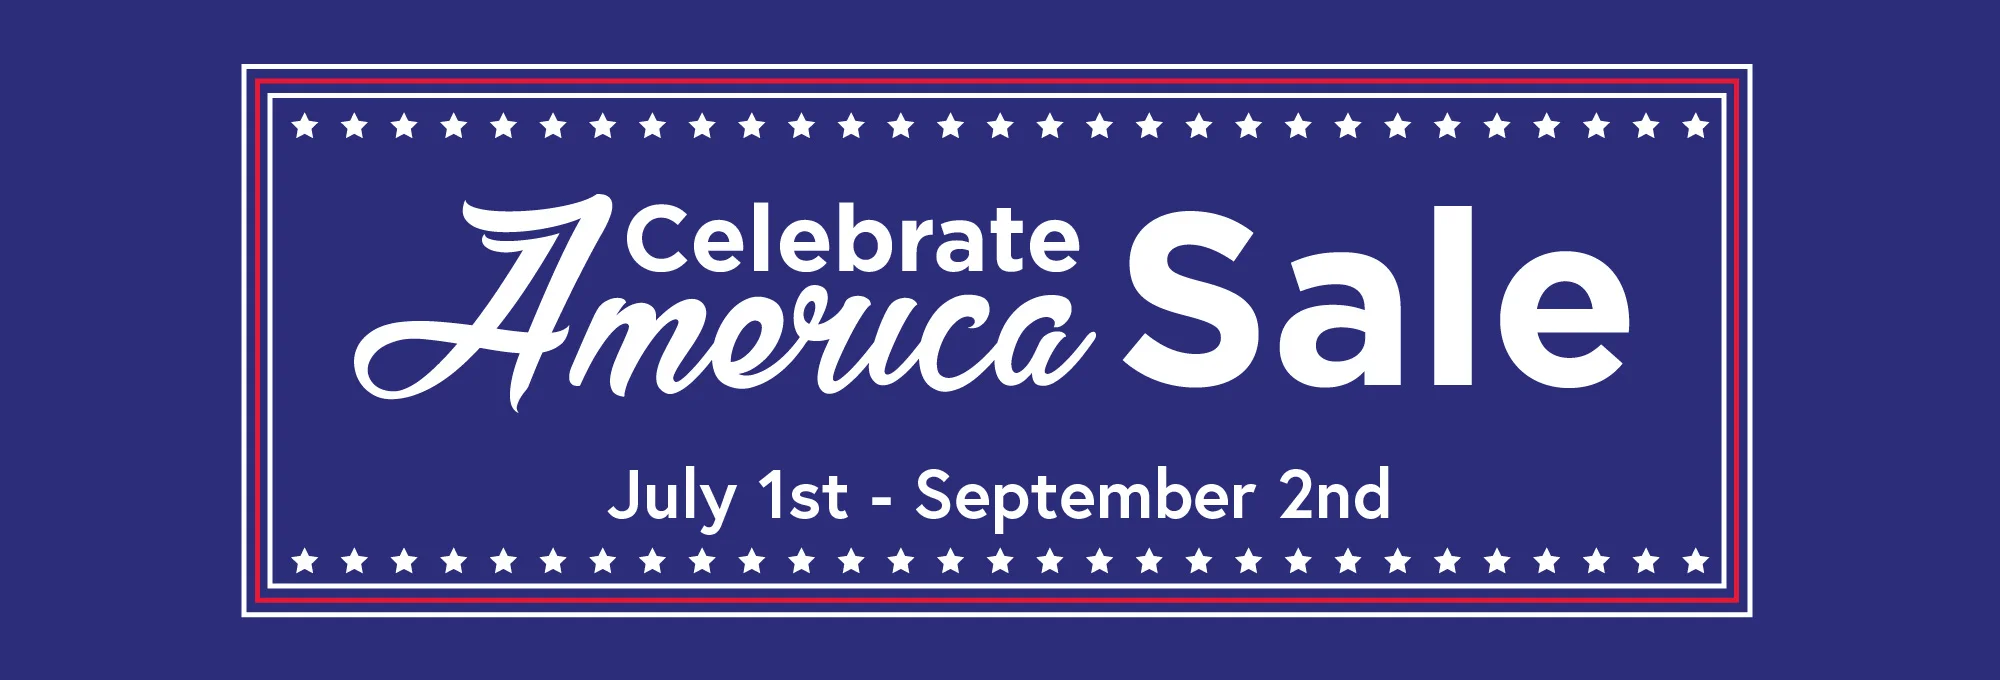 Celebrate America Sale at CarpetsPlus ColorTile